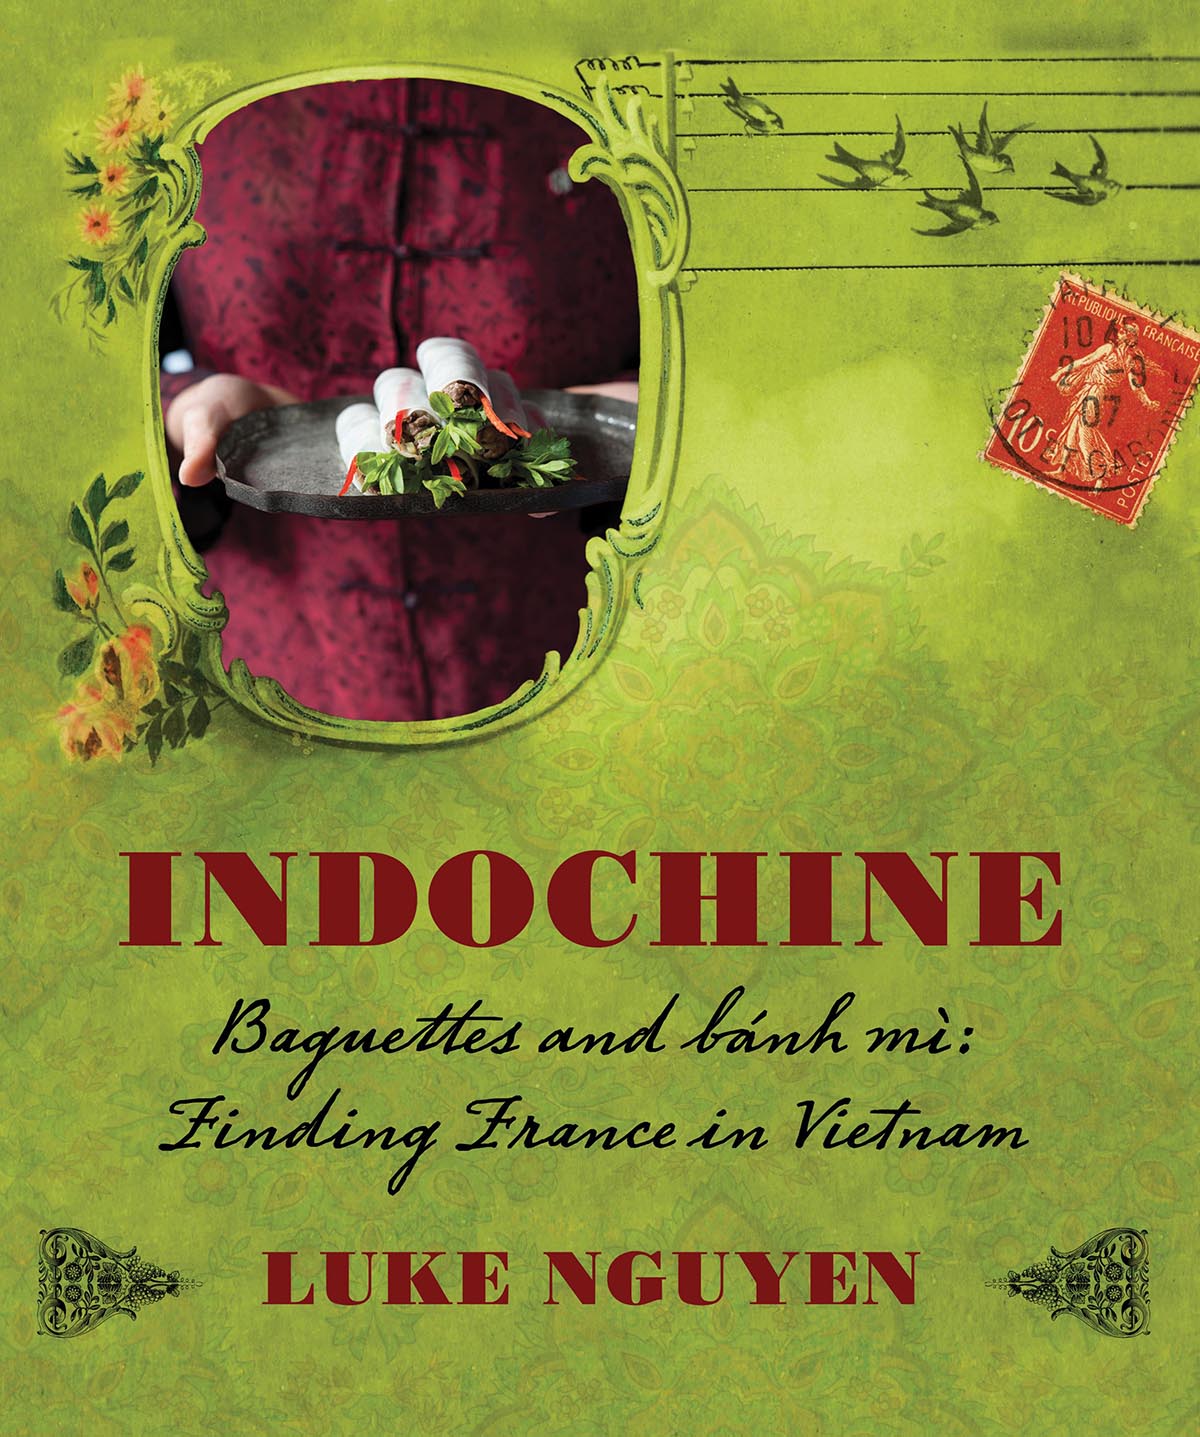 Indochine by Luke Nguyen